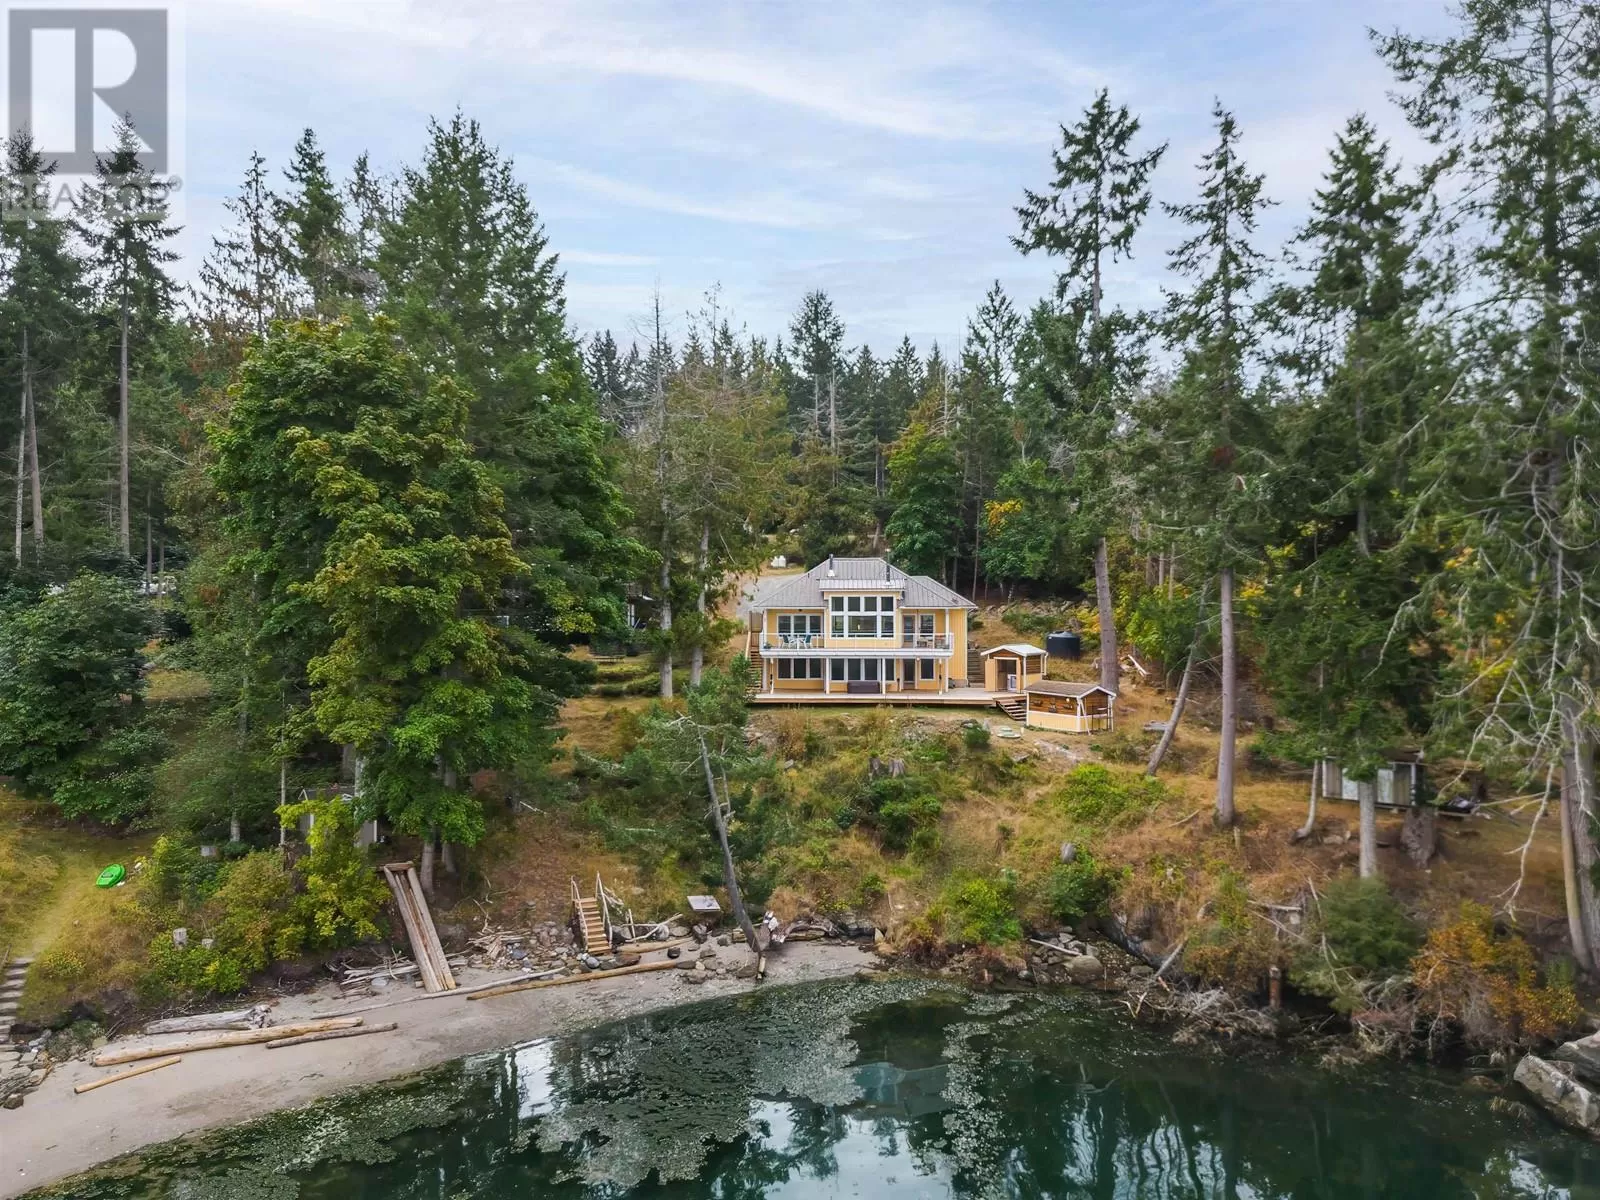 House for rent: 225 Mariners Way, Mayne Island, British Columbia V0N 2J2